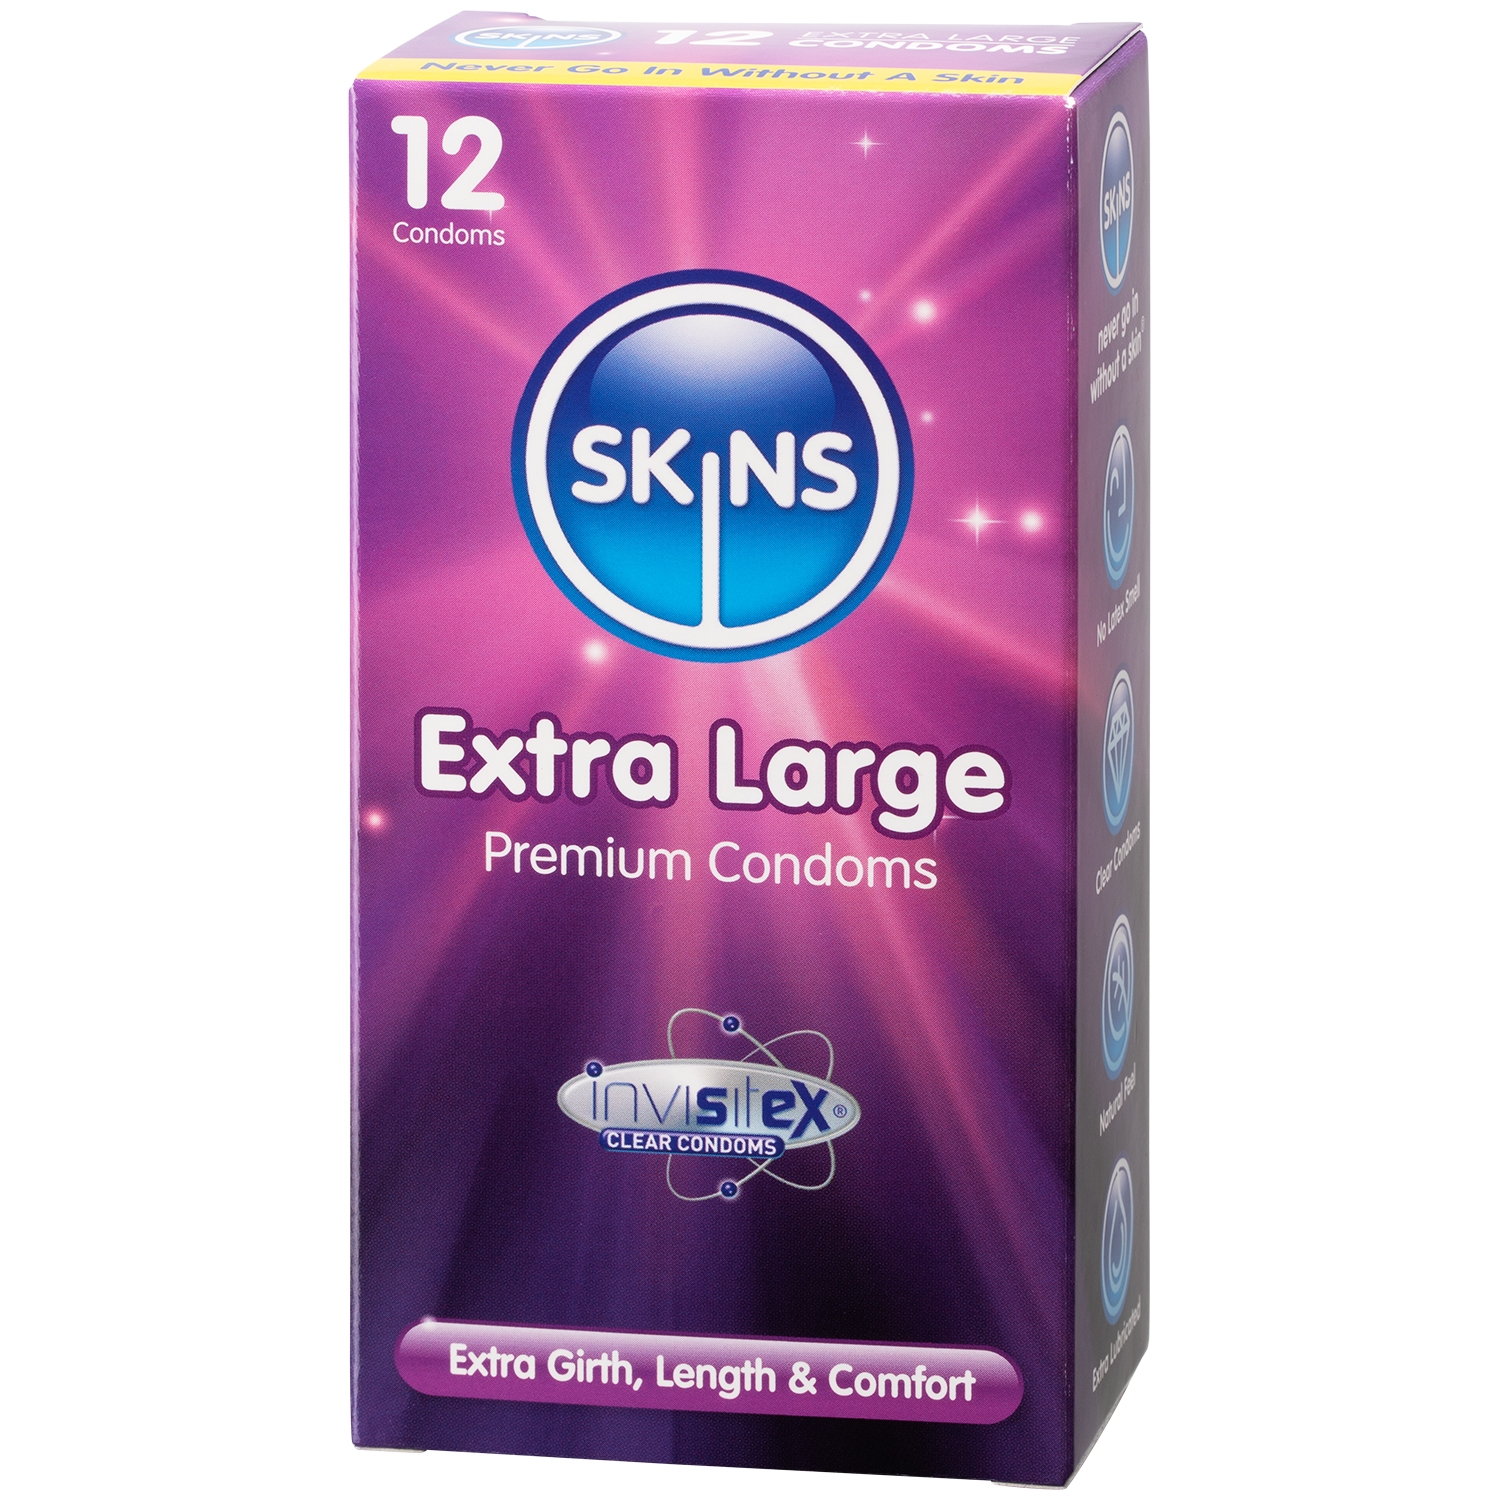 Skins Extra Large Kondomer 12 stk - Klar